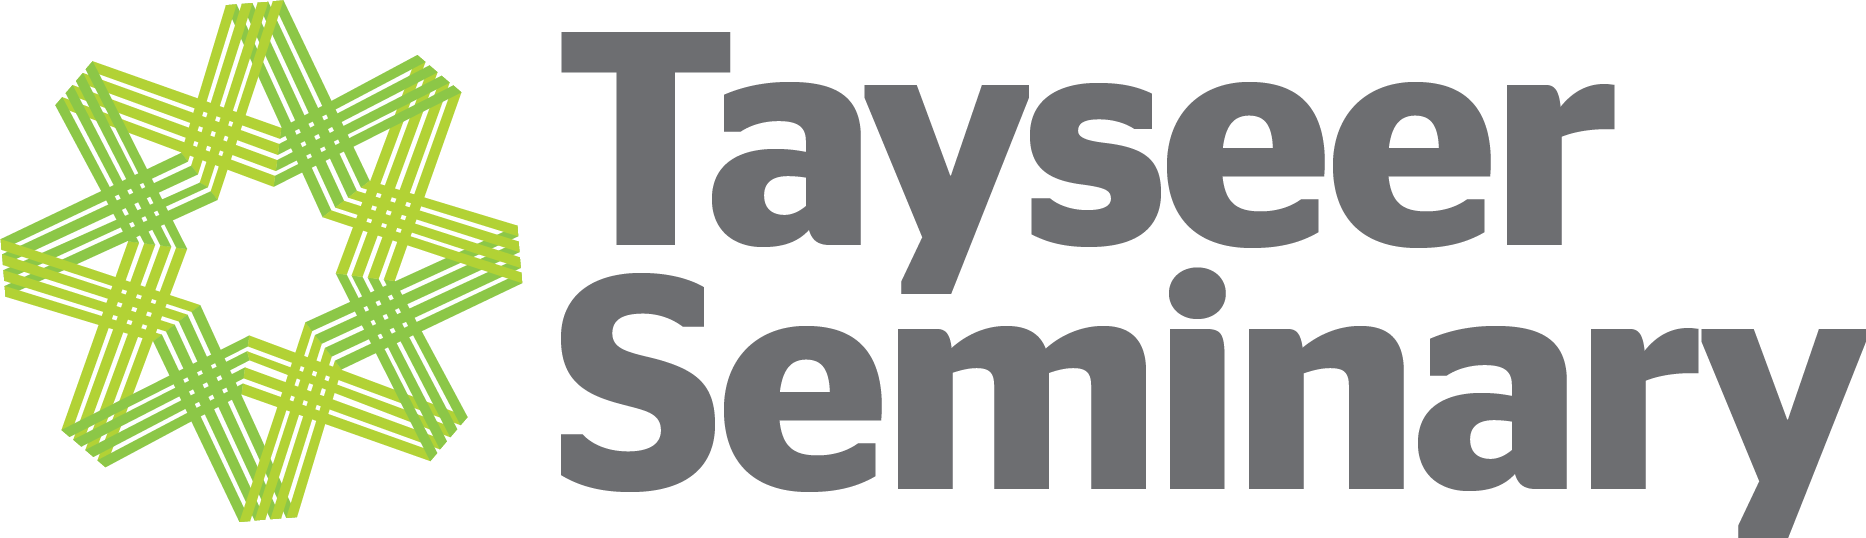 Tayseer Seminary logo